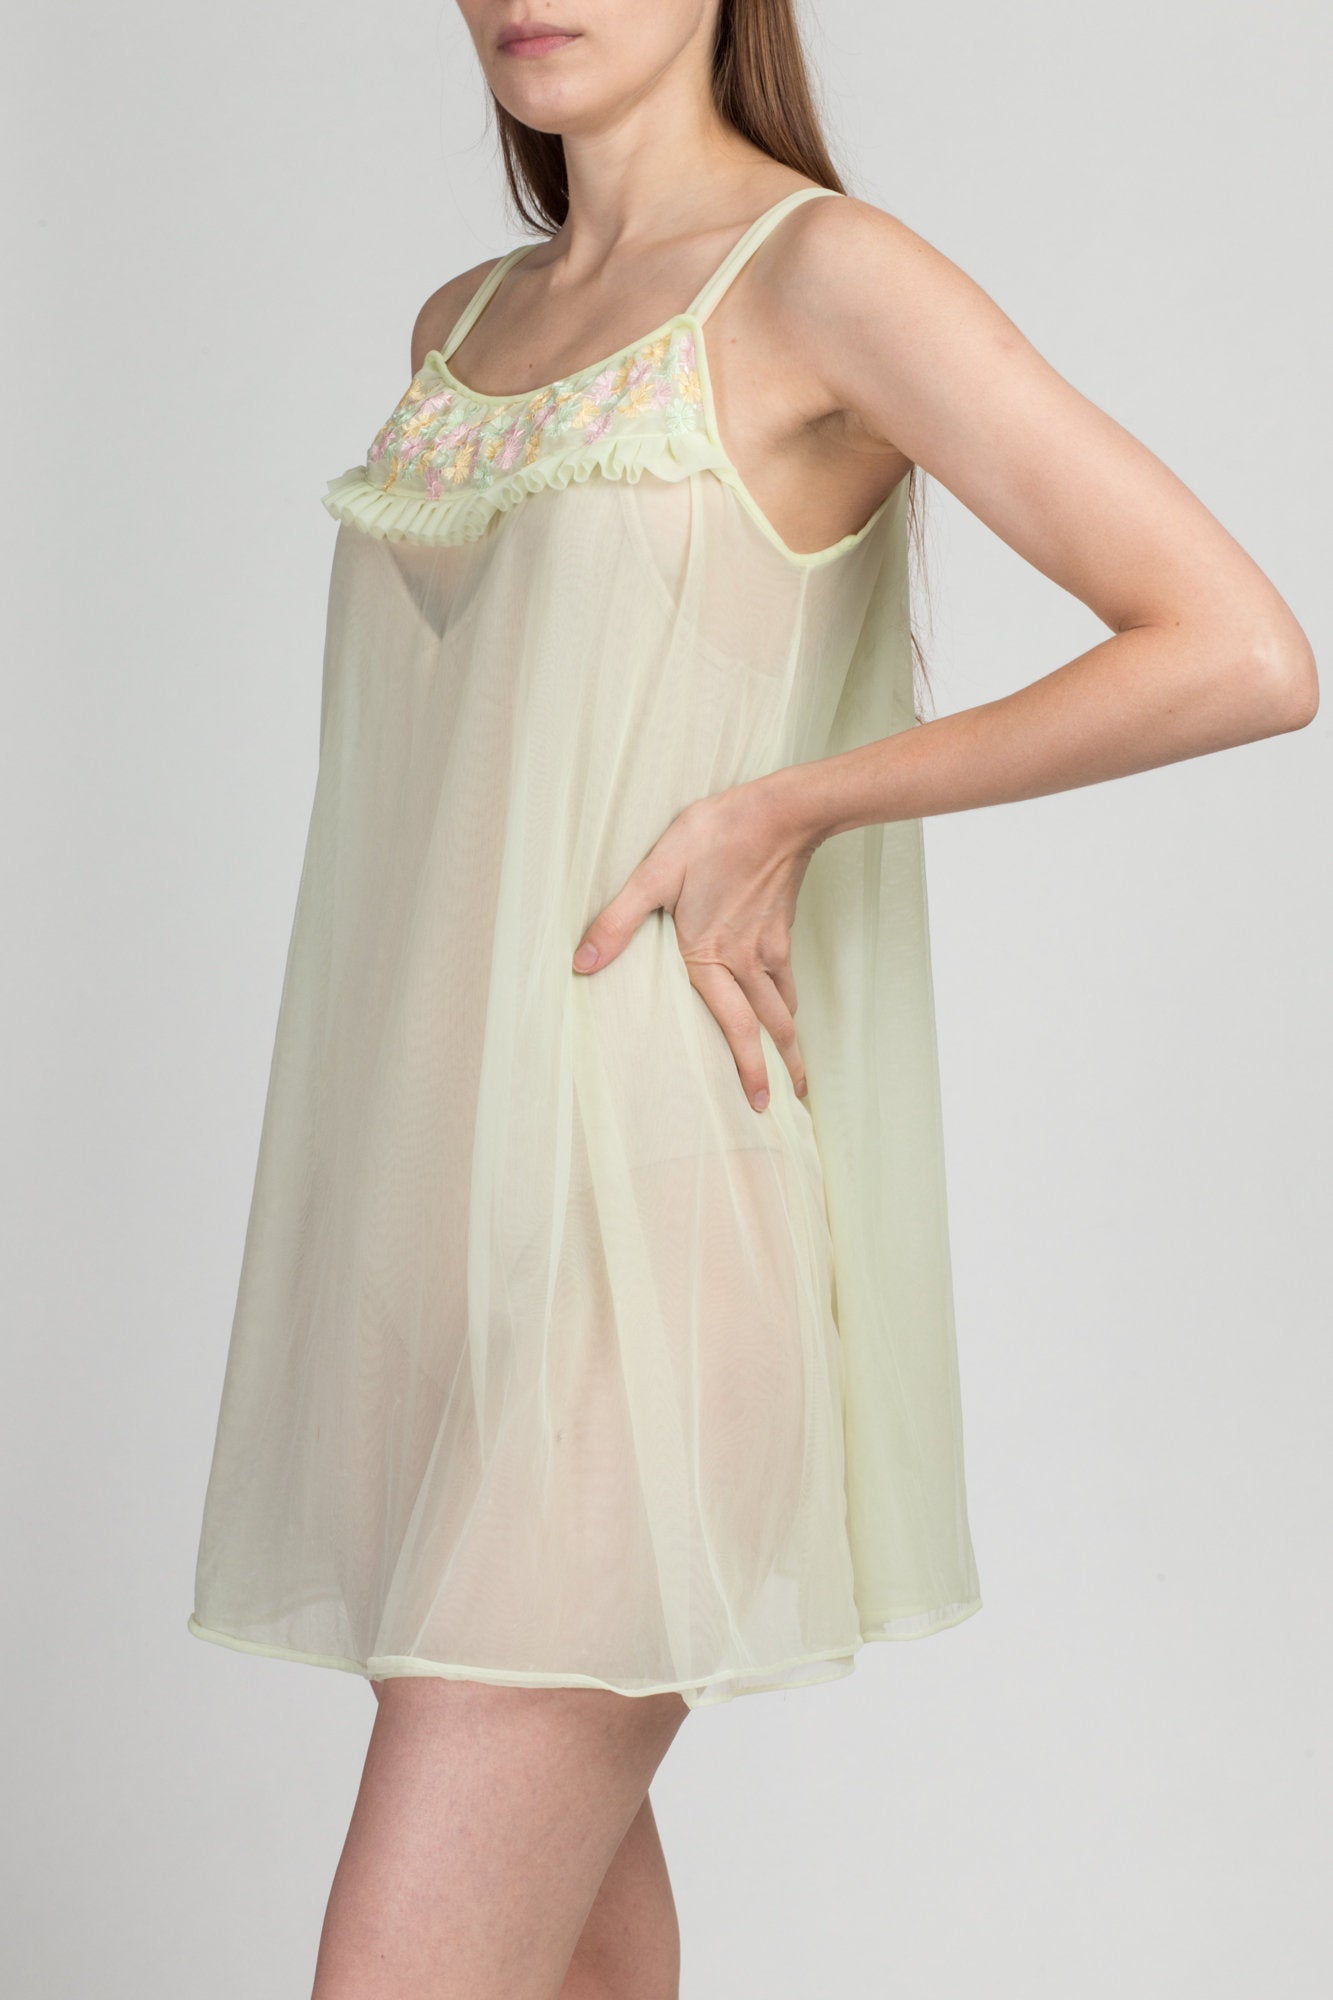 60s Mint Green Floral Trim Babydoll Nightie - Medium | Vintage Sheer Peignoir Mini Negligee Slip Dress